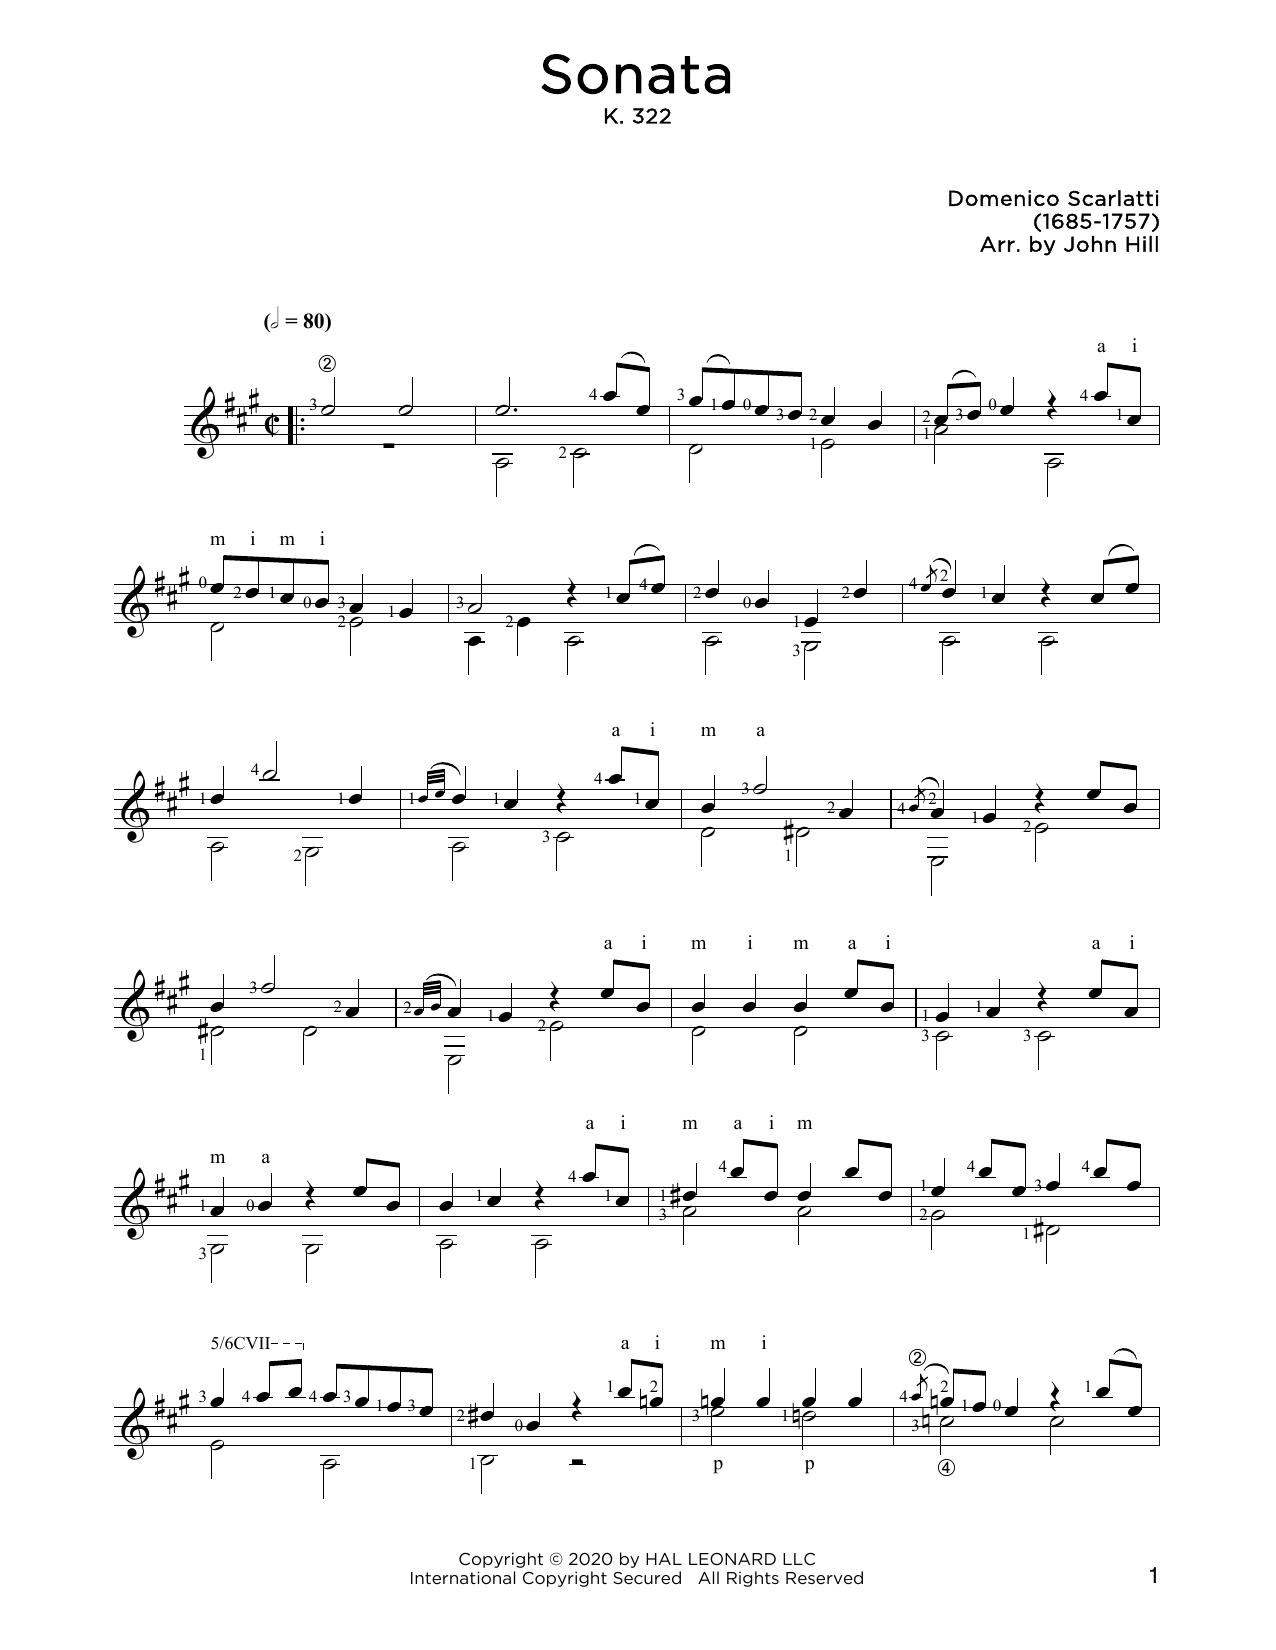 Domenico Scarlatti Sonata In A Sheet Music Notes & Chords for Solo Guitar - Download or Print PDF